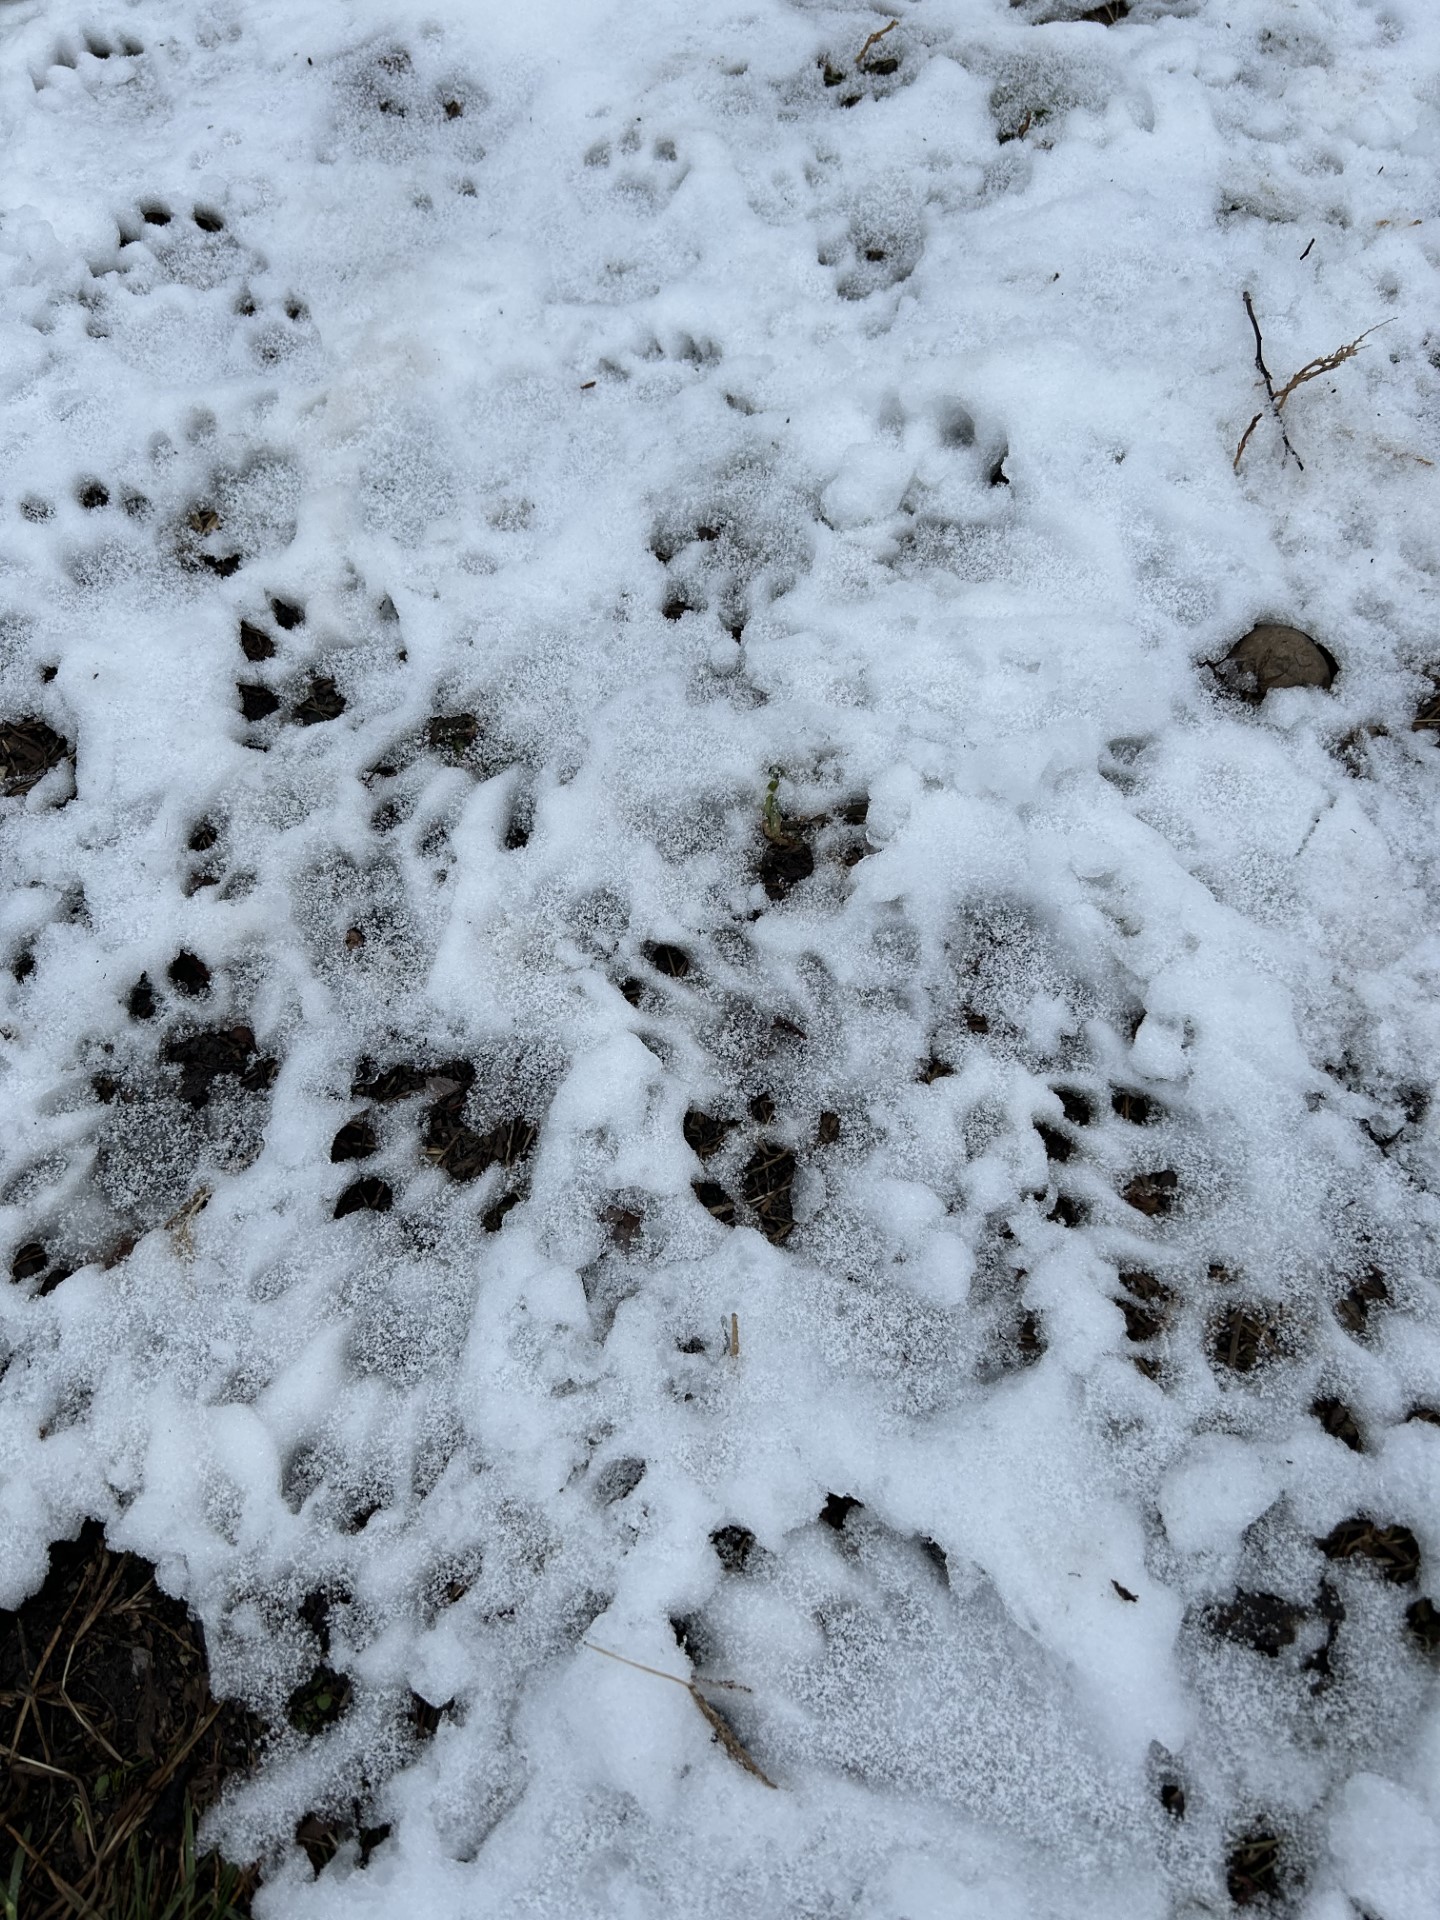 wild animal paw prints in the snow